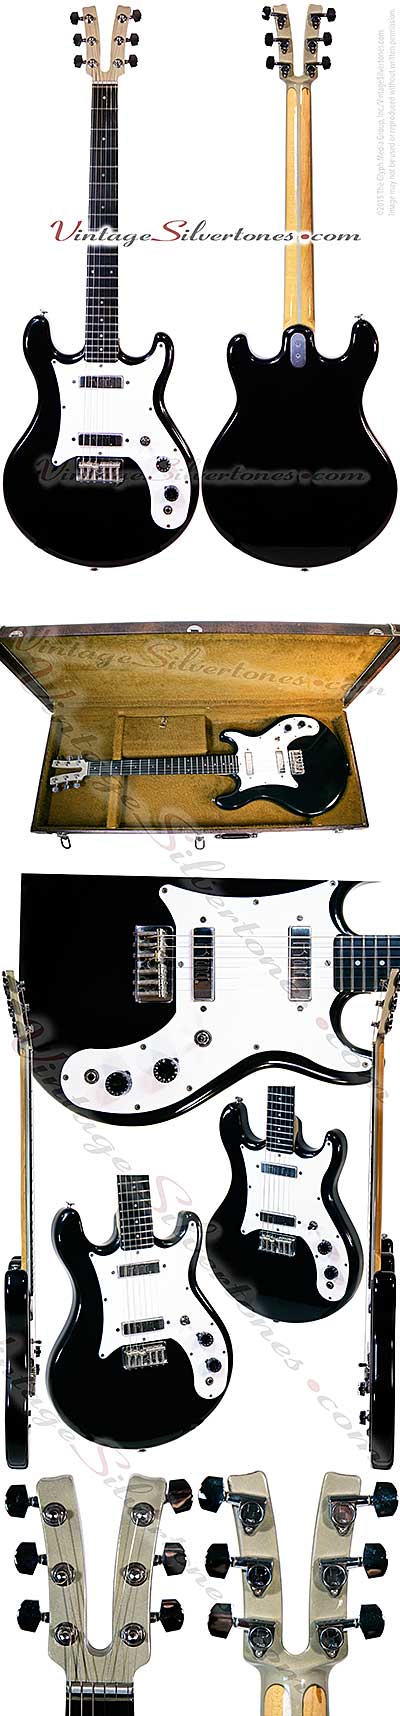 Kramer 250g-Neptune, NJ 2 pickup, electric guitar, 1977, black, white pickguard, double cutaway